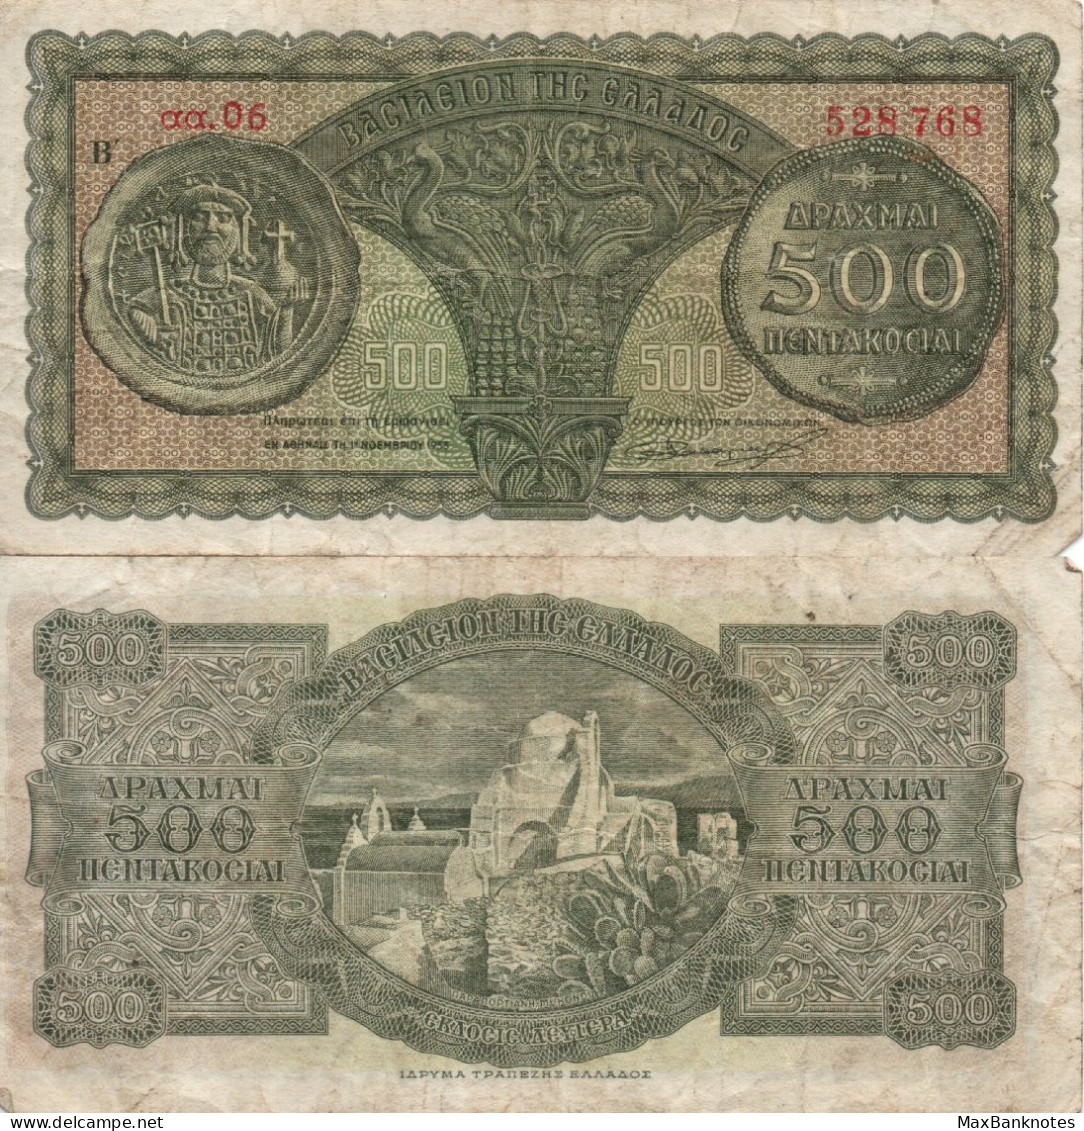 Greece / 500 Drachmai / 1953 / P-325(b) / VF - Greece